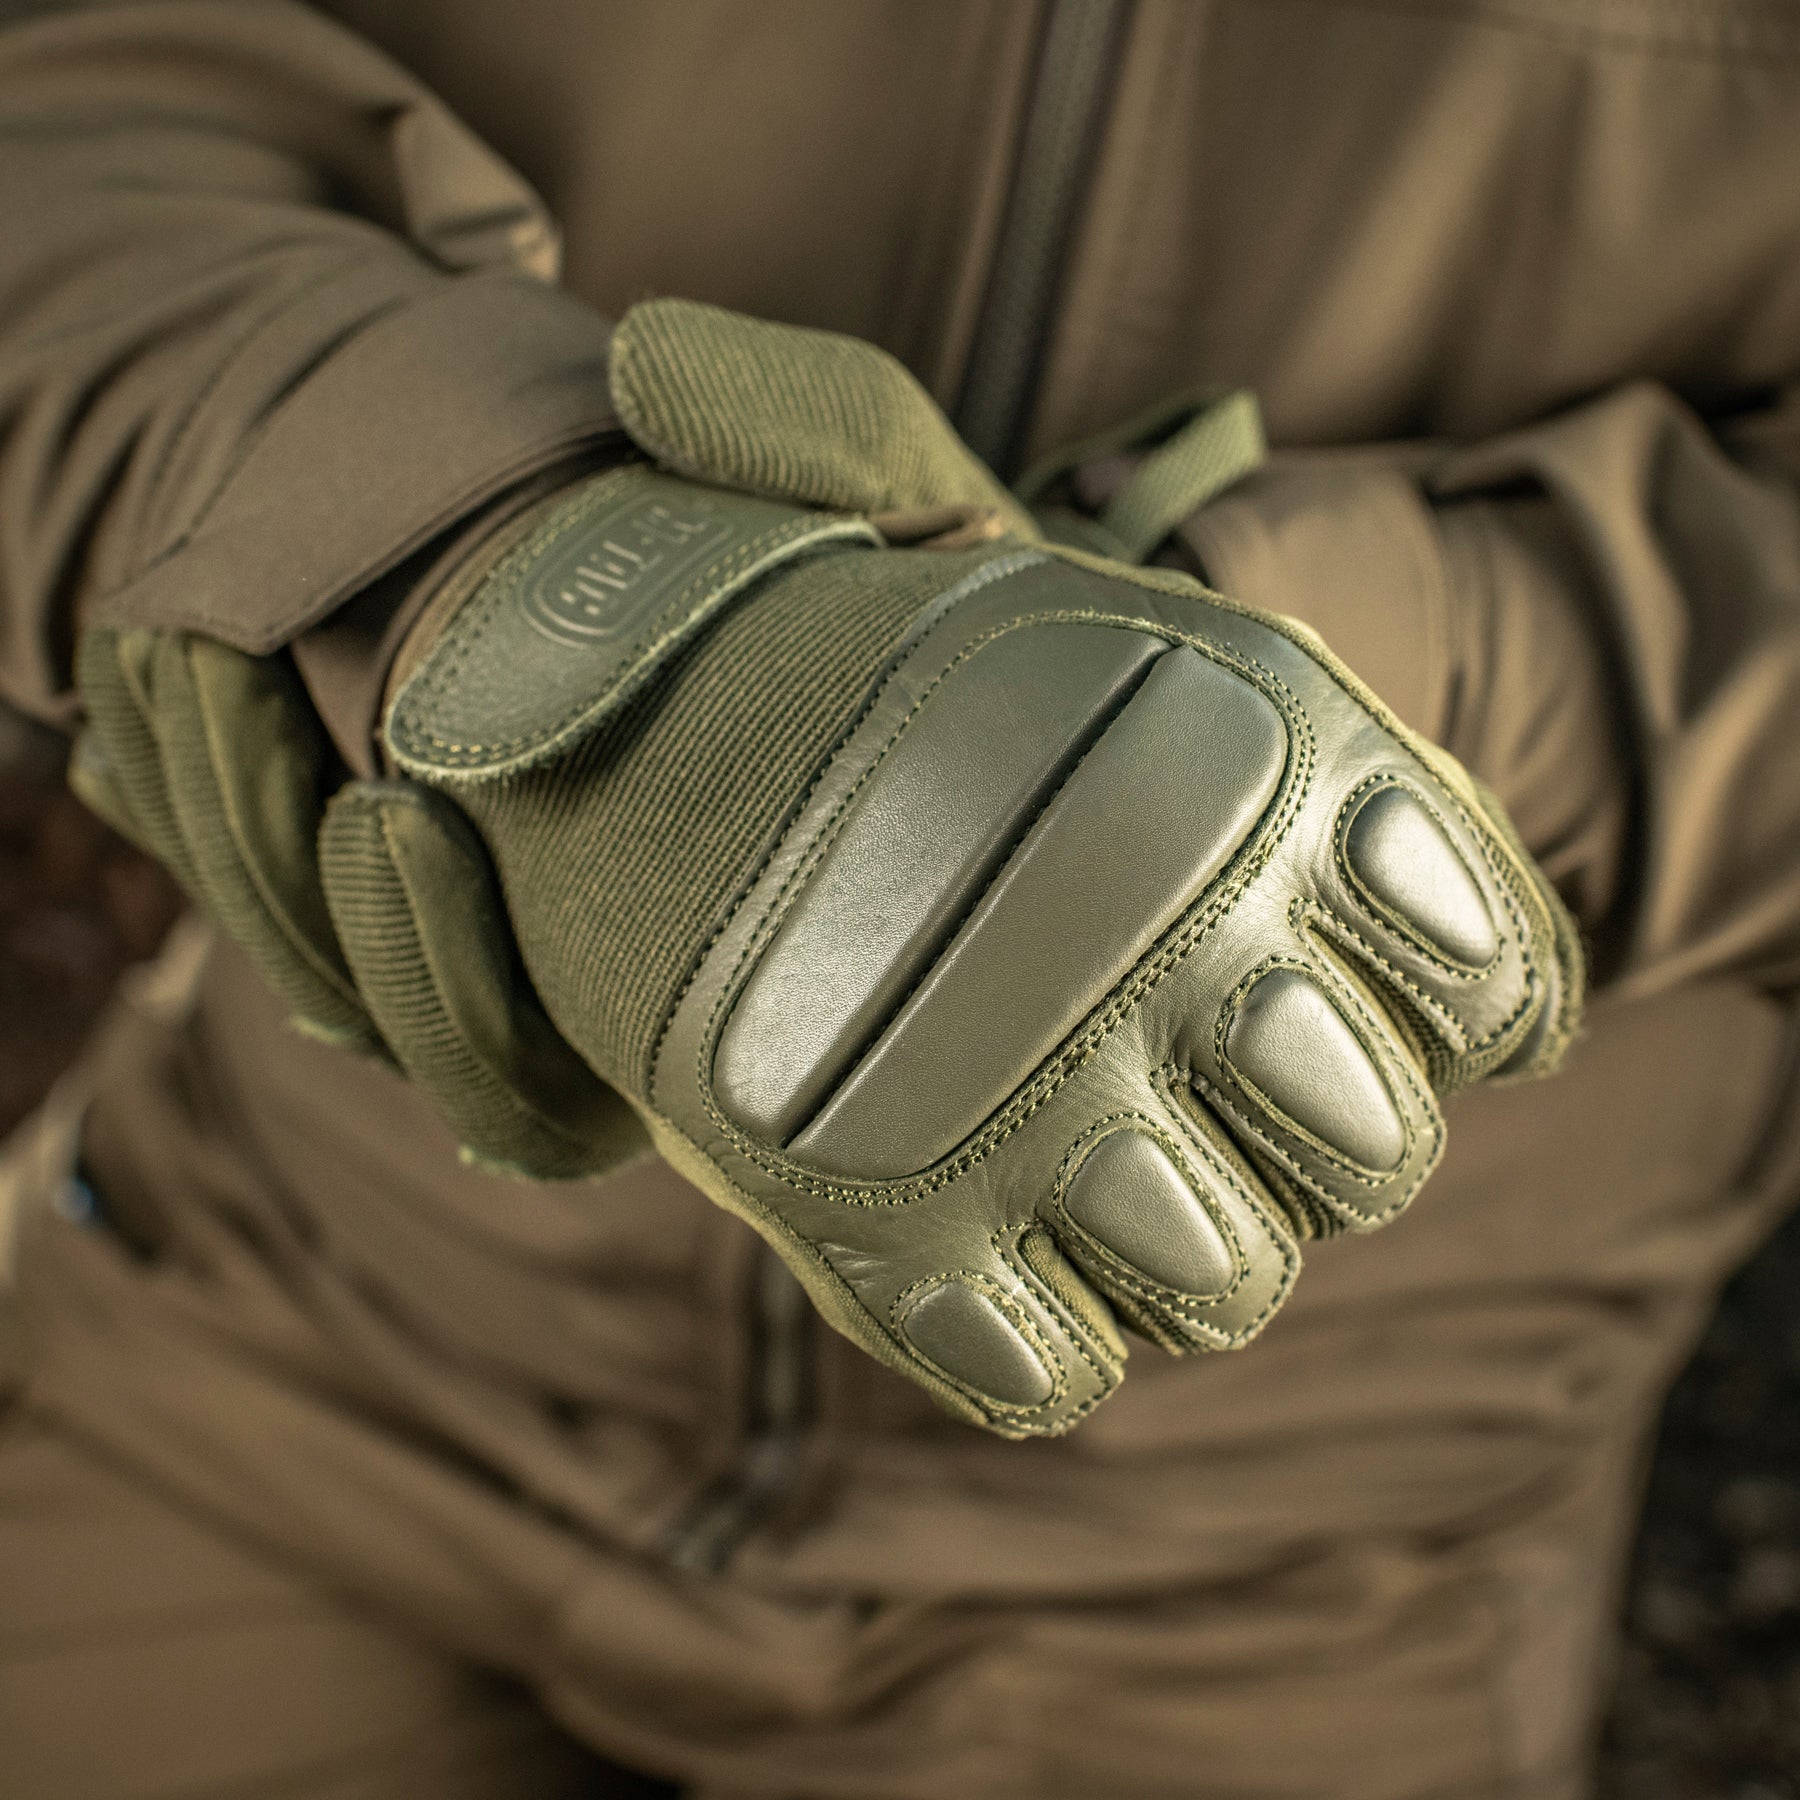 M-Tac Gloves Assault Tactical Mk.2